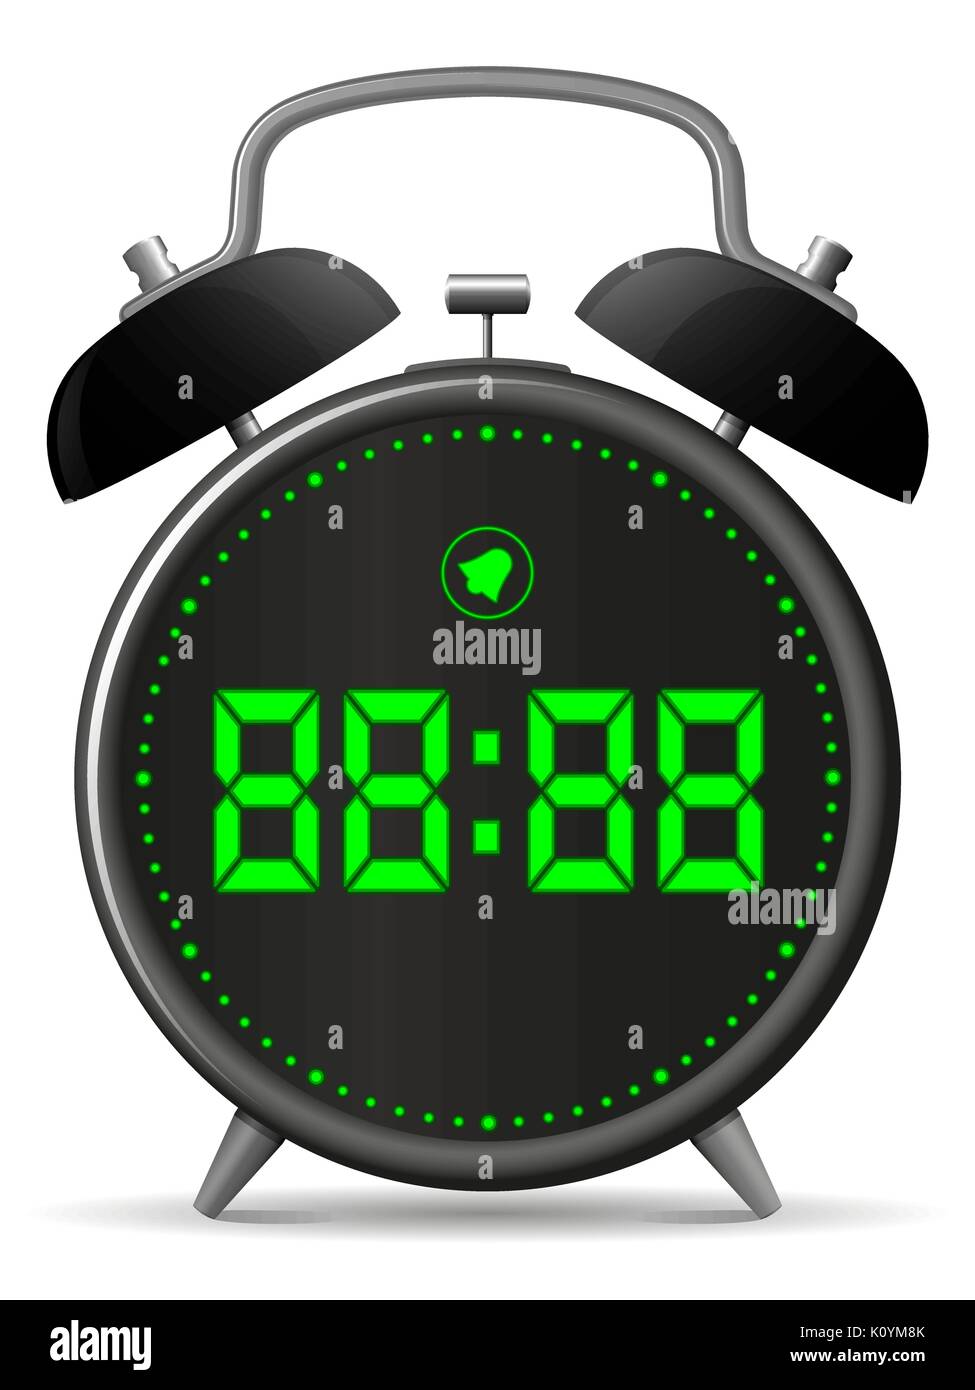 Classic alarm clock with digital display illustration Stock Vector